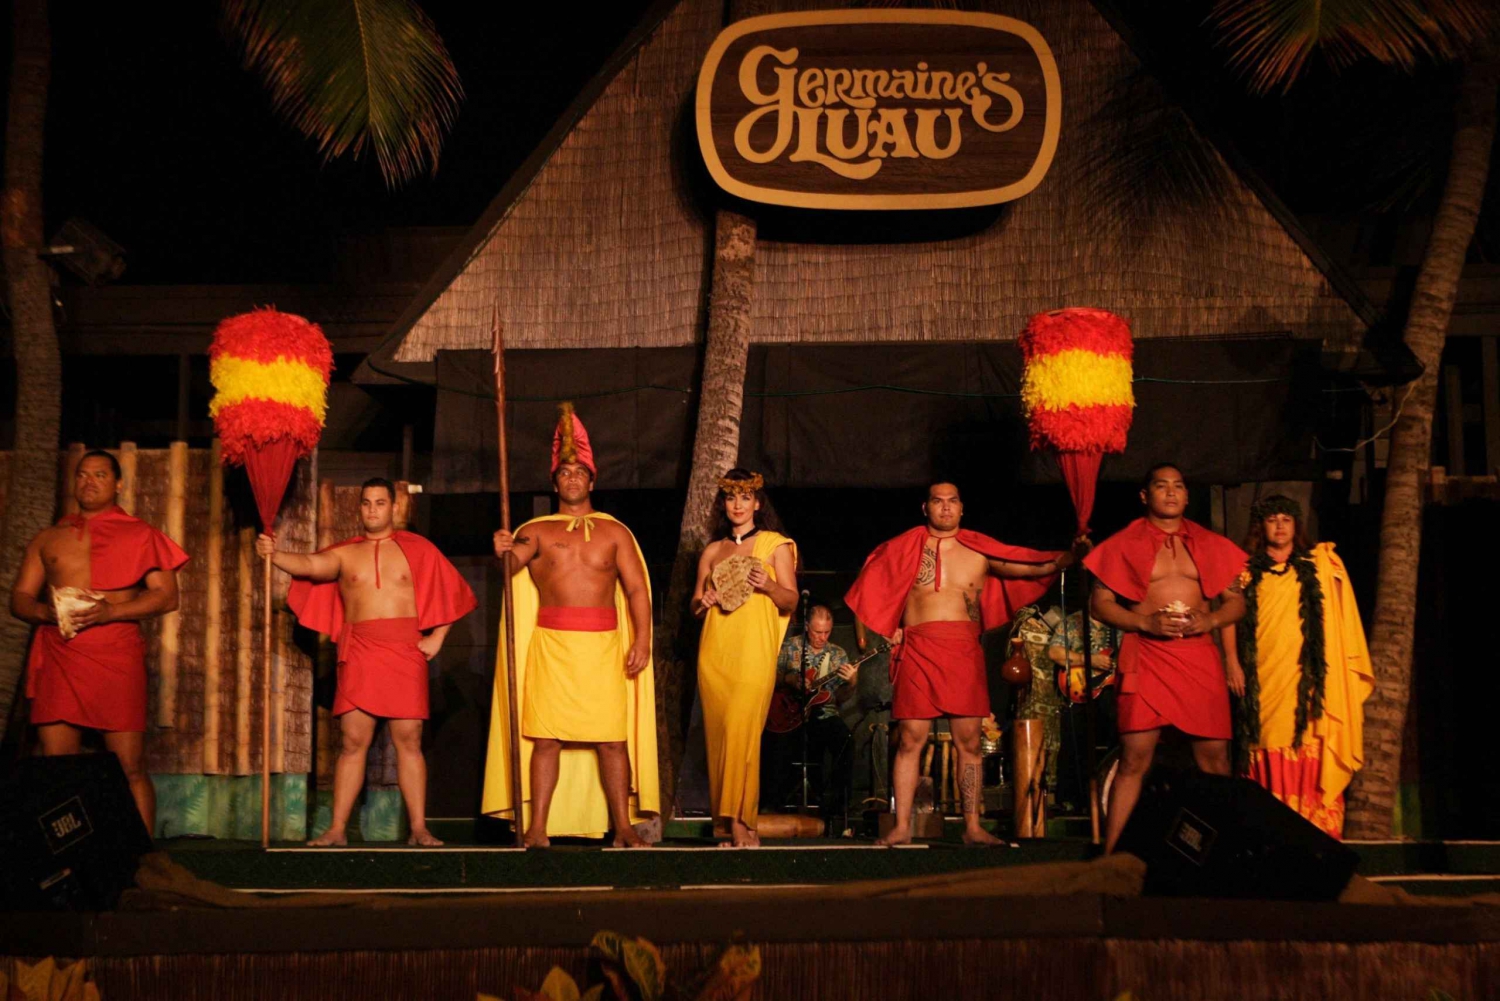 Oahu: Germaine's Traditional Luau Show & Buffet Dinner